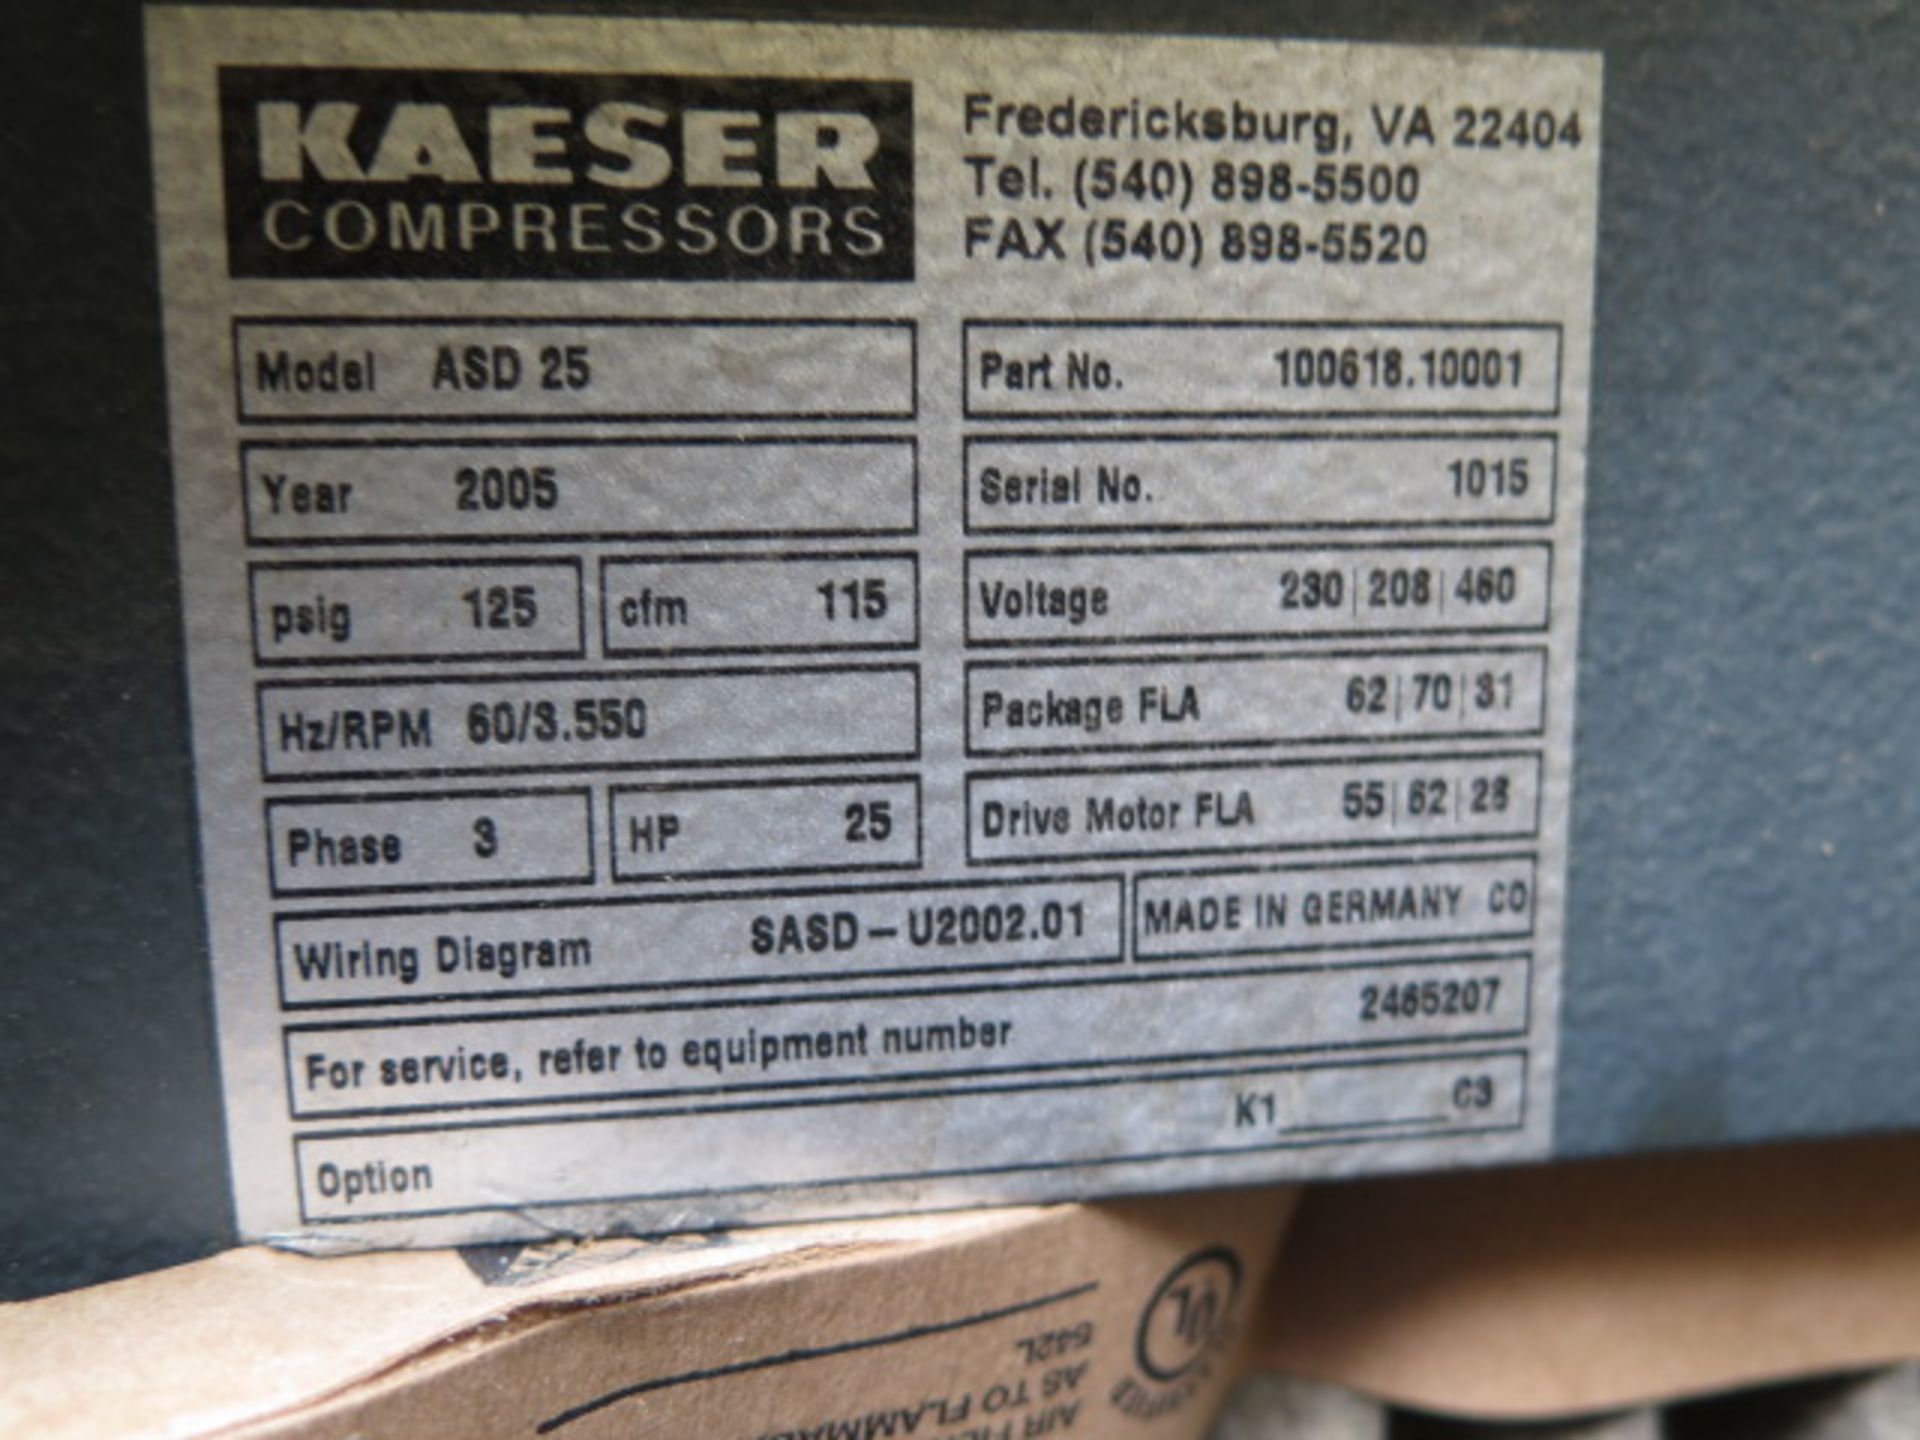 2005 Kaeser ASD25 25Hp Rotary Air Compressor s/n 1015 w/ Kaeser Sigma Digital Controls, 115 CFM @ - Image 5 of 9